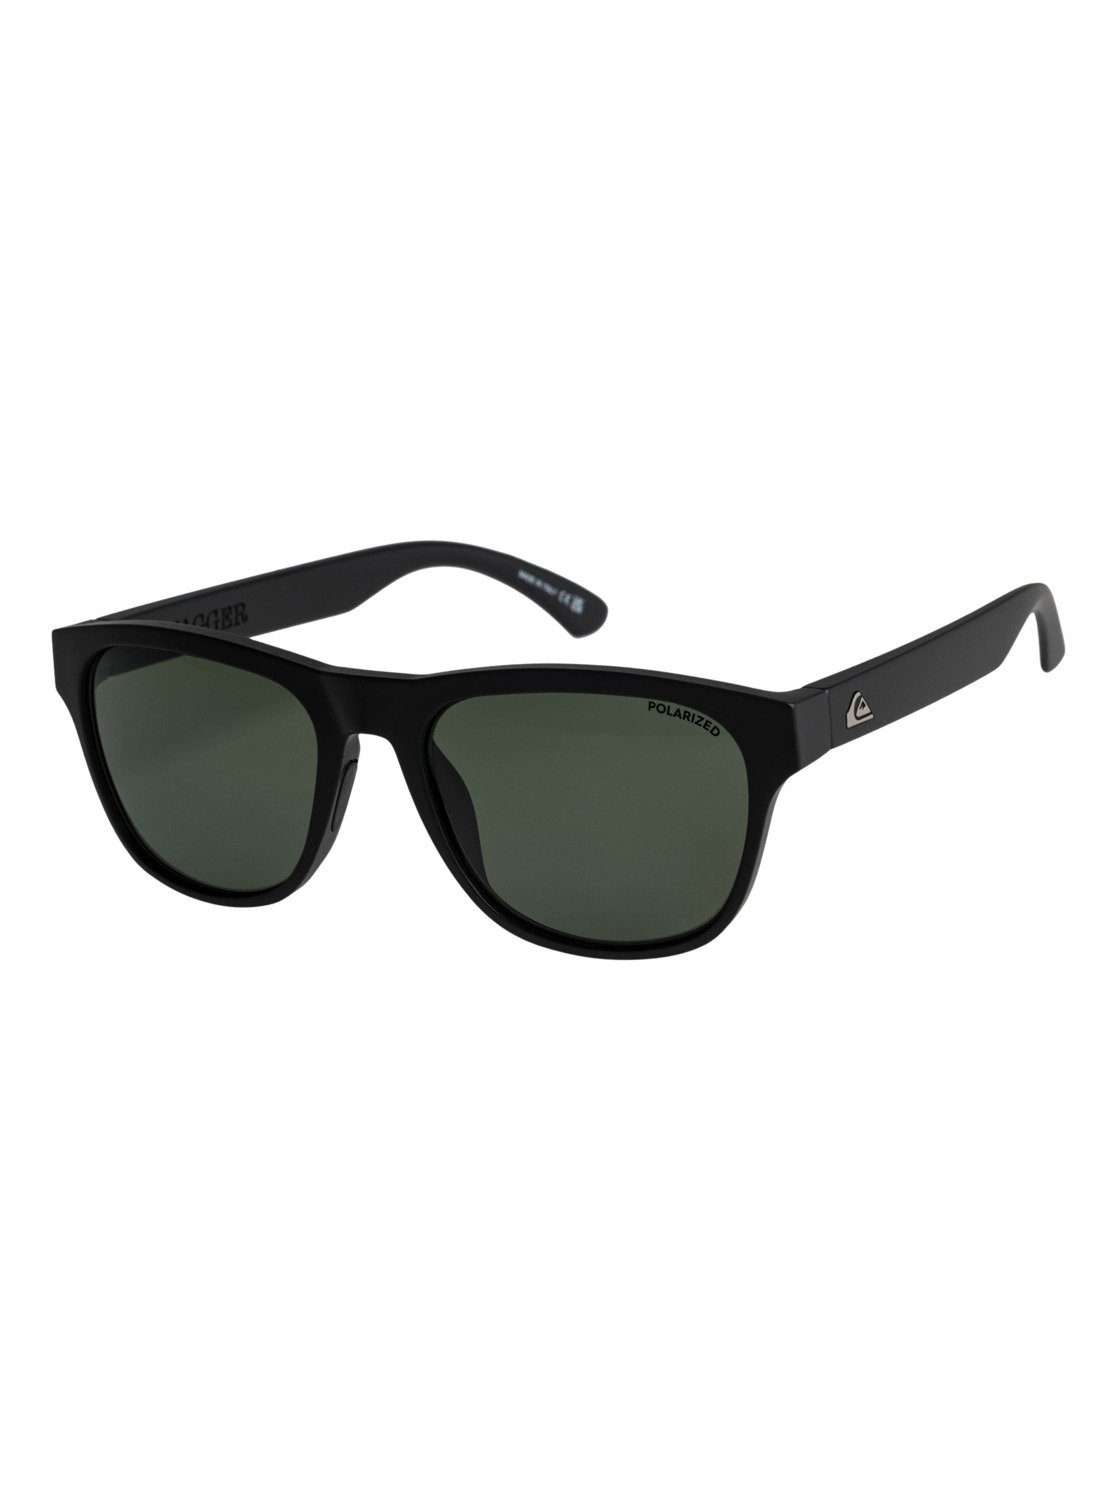 100 % garantiert Quiksilver Sonnenbrille Tagger Plz Polarized Black/Green